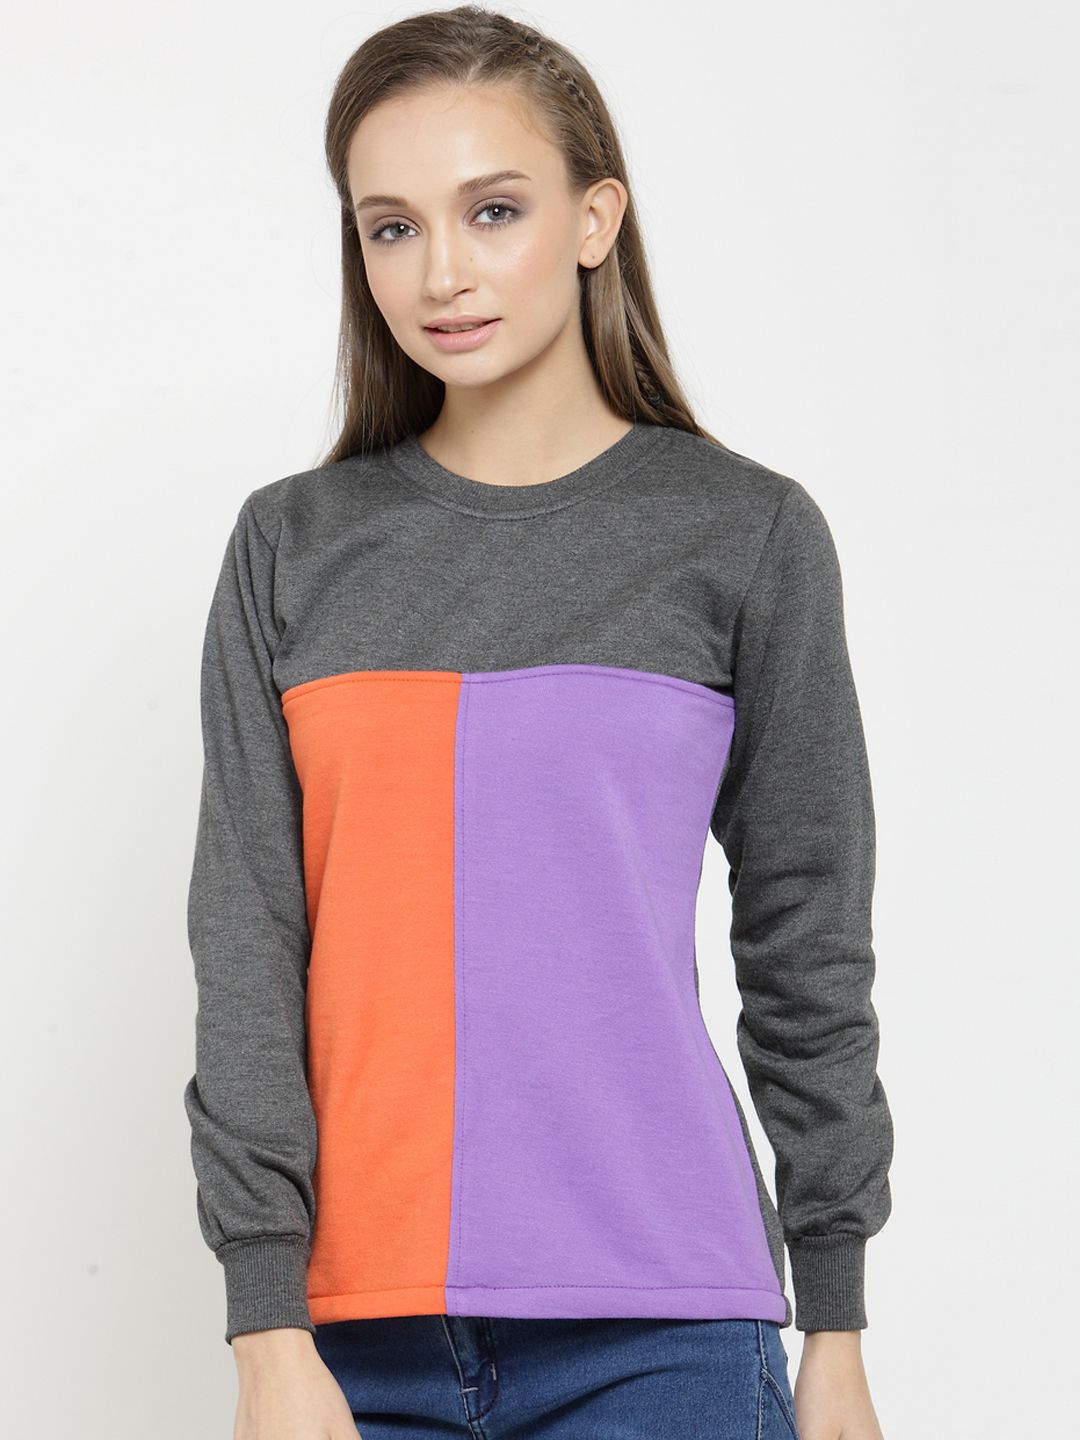 Belle Fille Women Grey & Orange Colourblocked Sweatshirt Price in India